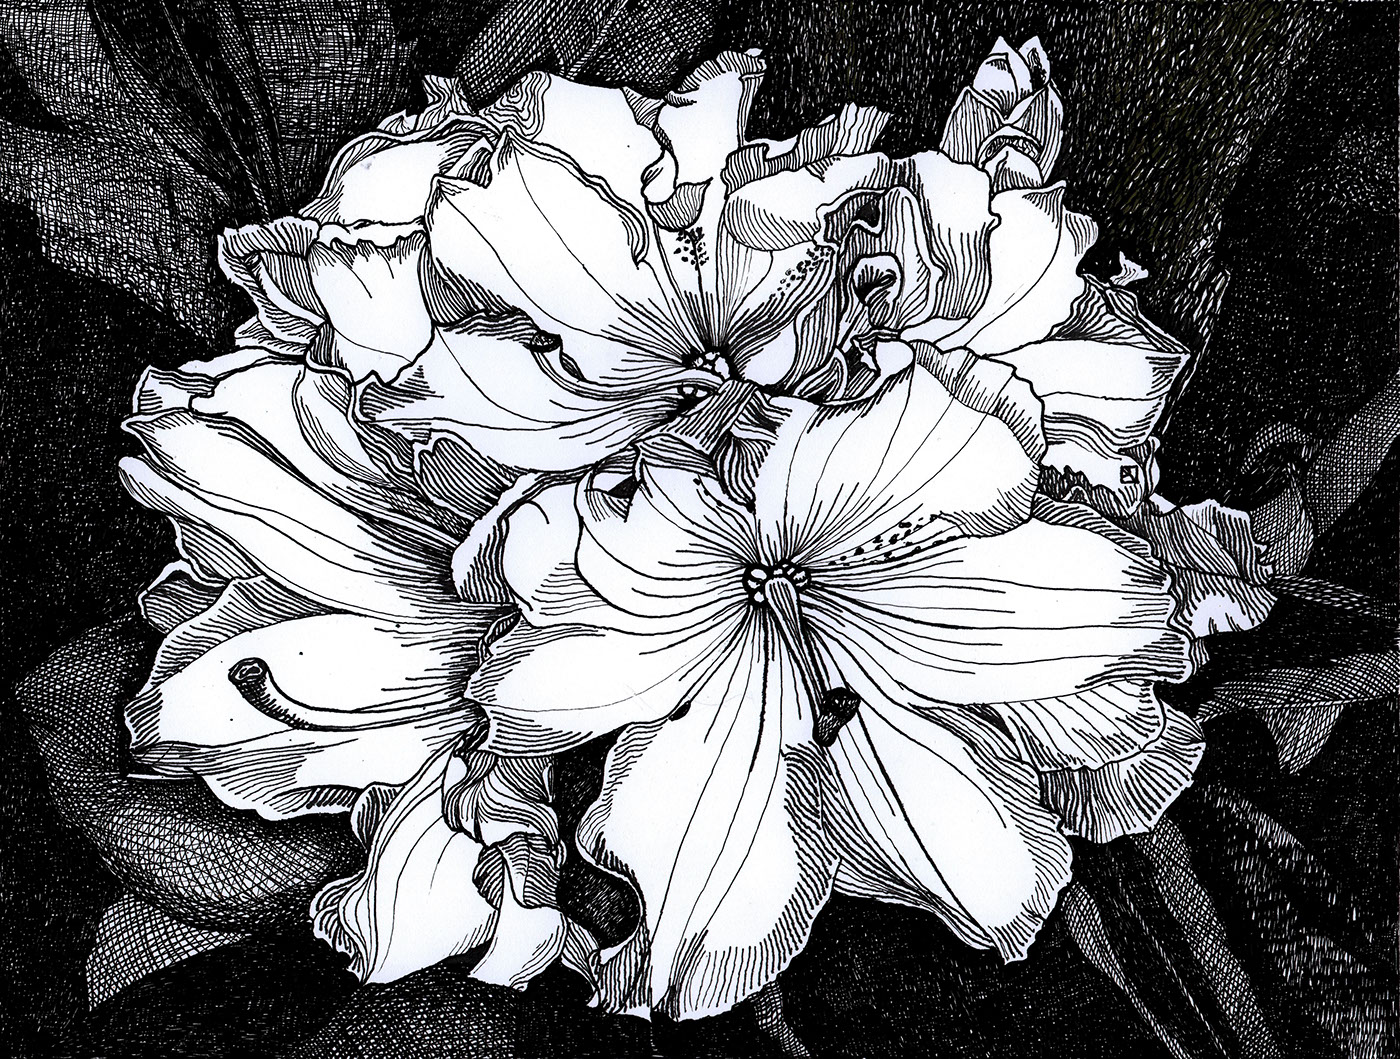 pen and ink ink drawings realistic Illustrative delicate details Flowers leaves nature rhythms original handmade  unique art